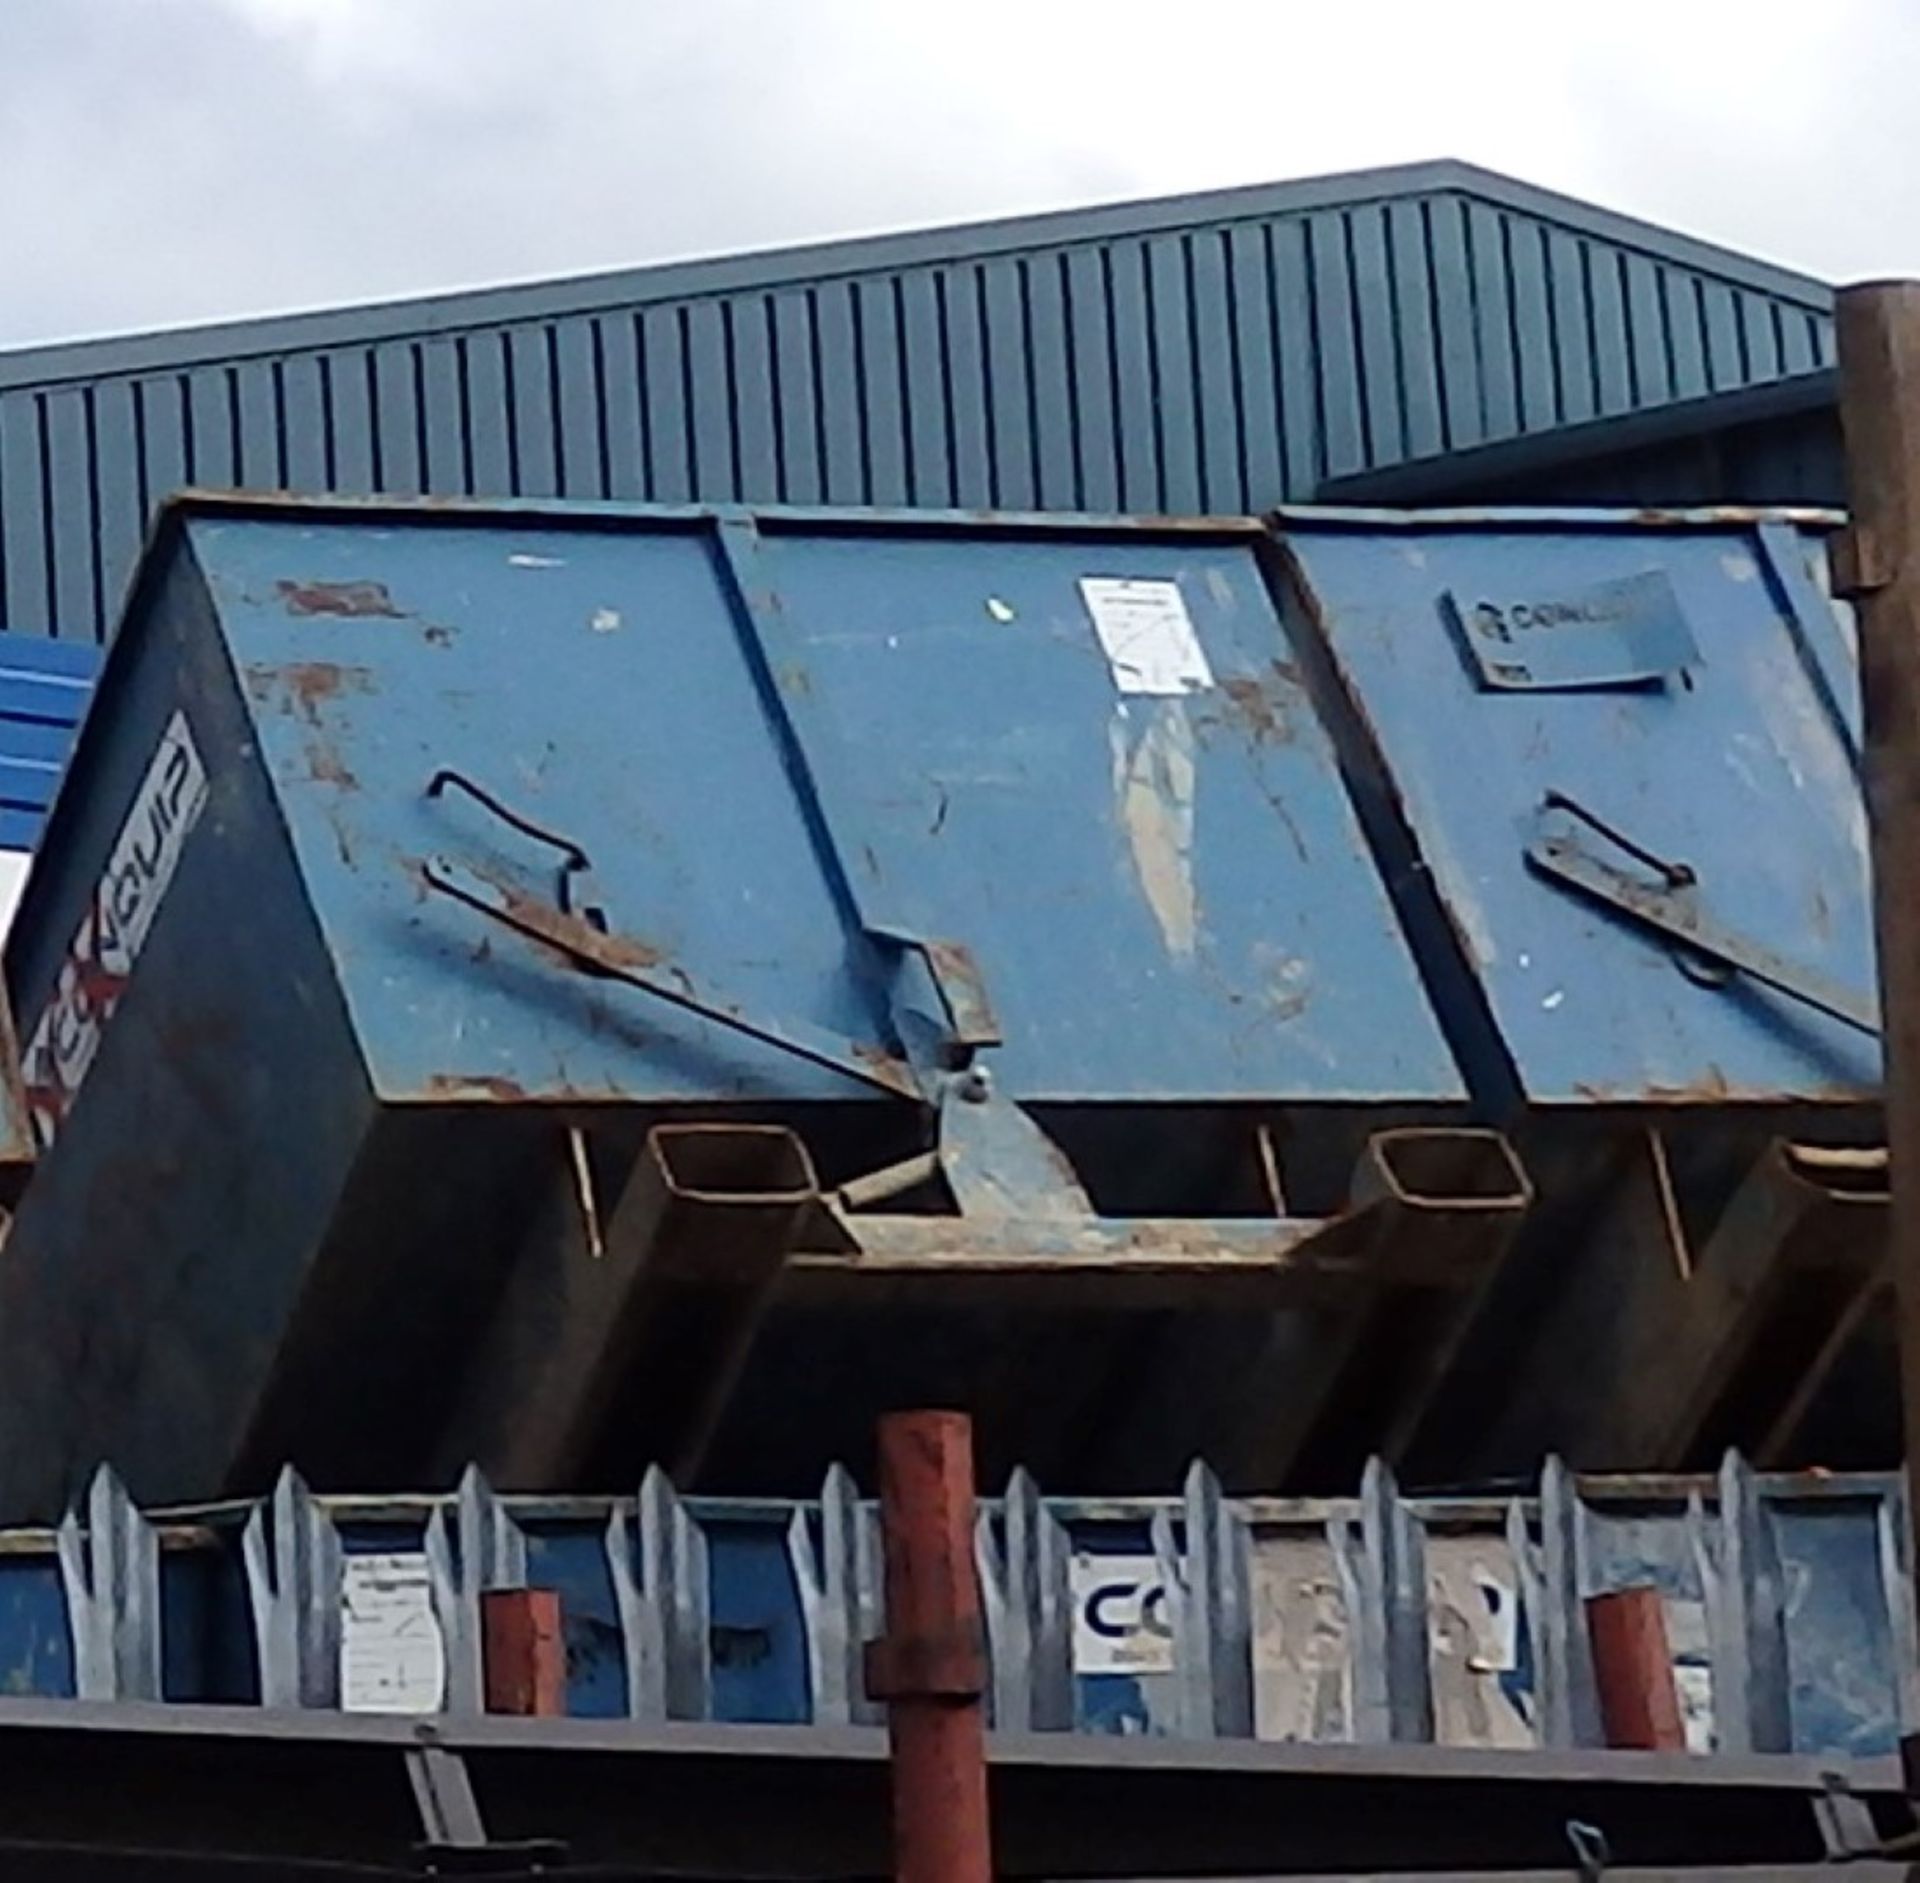 1 x Conquip Forklift Blue Skip Tipper - Heavy Duty - CL057 - Location: Welwyn, Hertfordshire, AL7 - Image 2 of 3